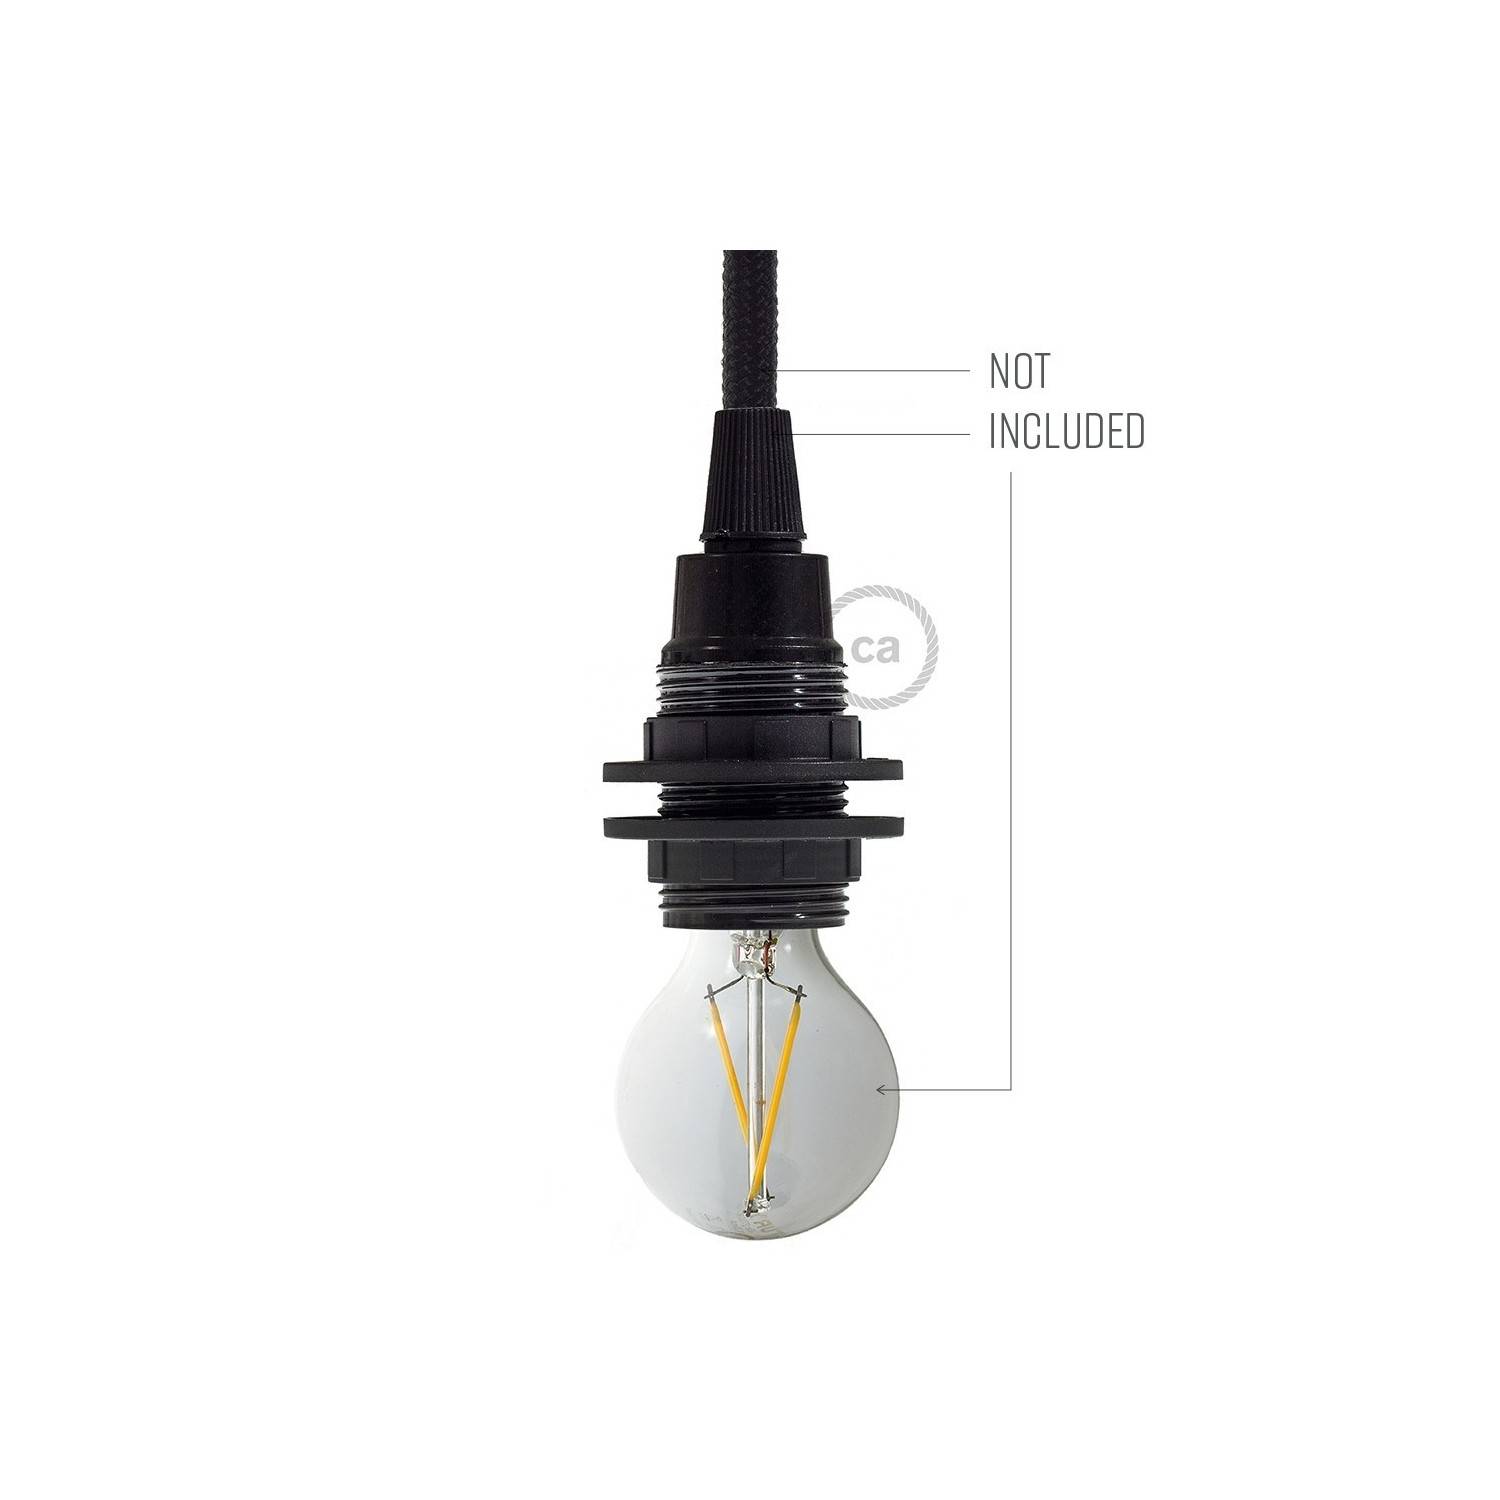 Double Ferrule - phenolic bakelite E12 light bulb socket